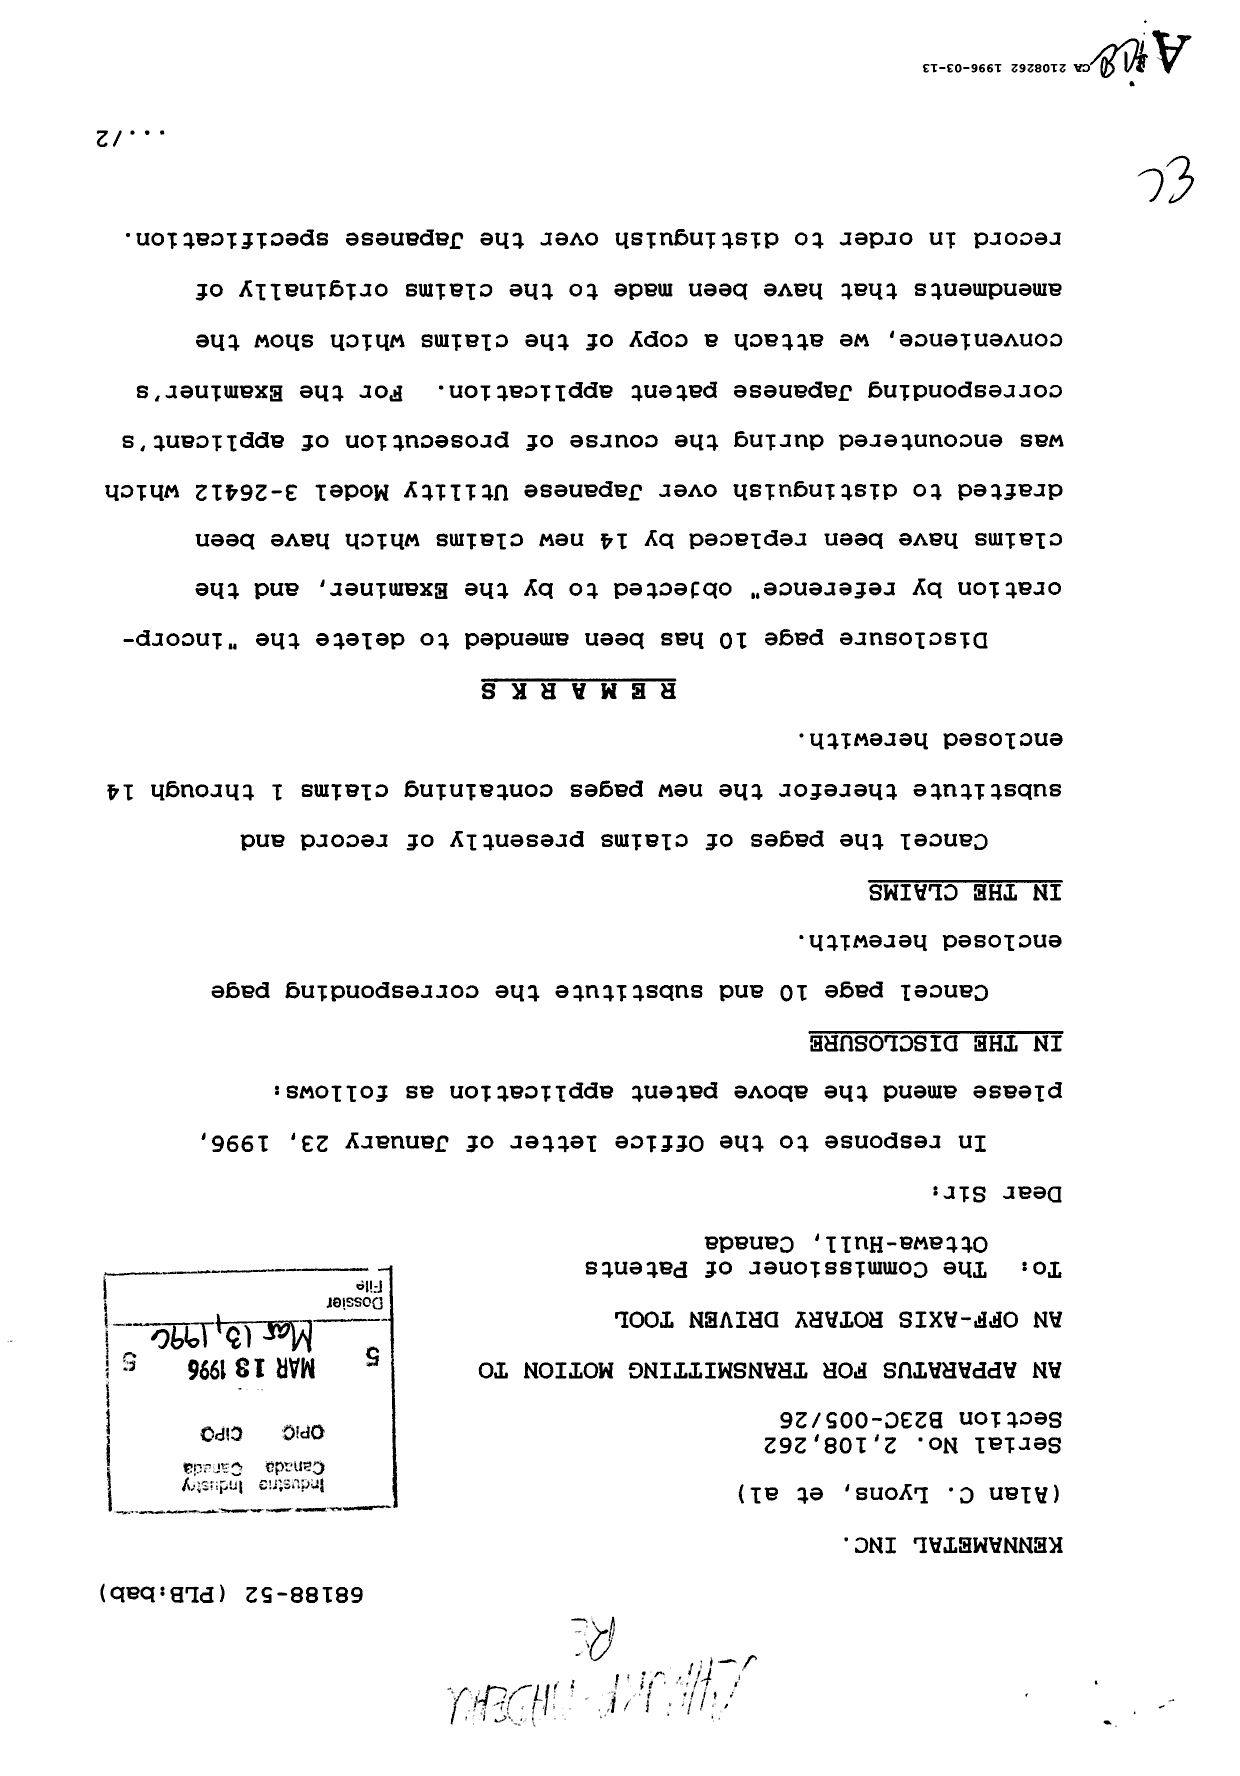 Canadian Patent Document 2108262. Prosecution Correspondence 19960313. Image 1 of 8